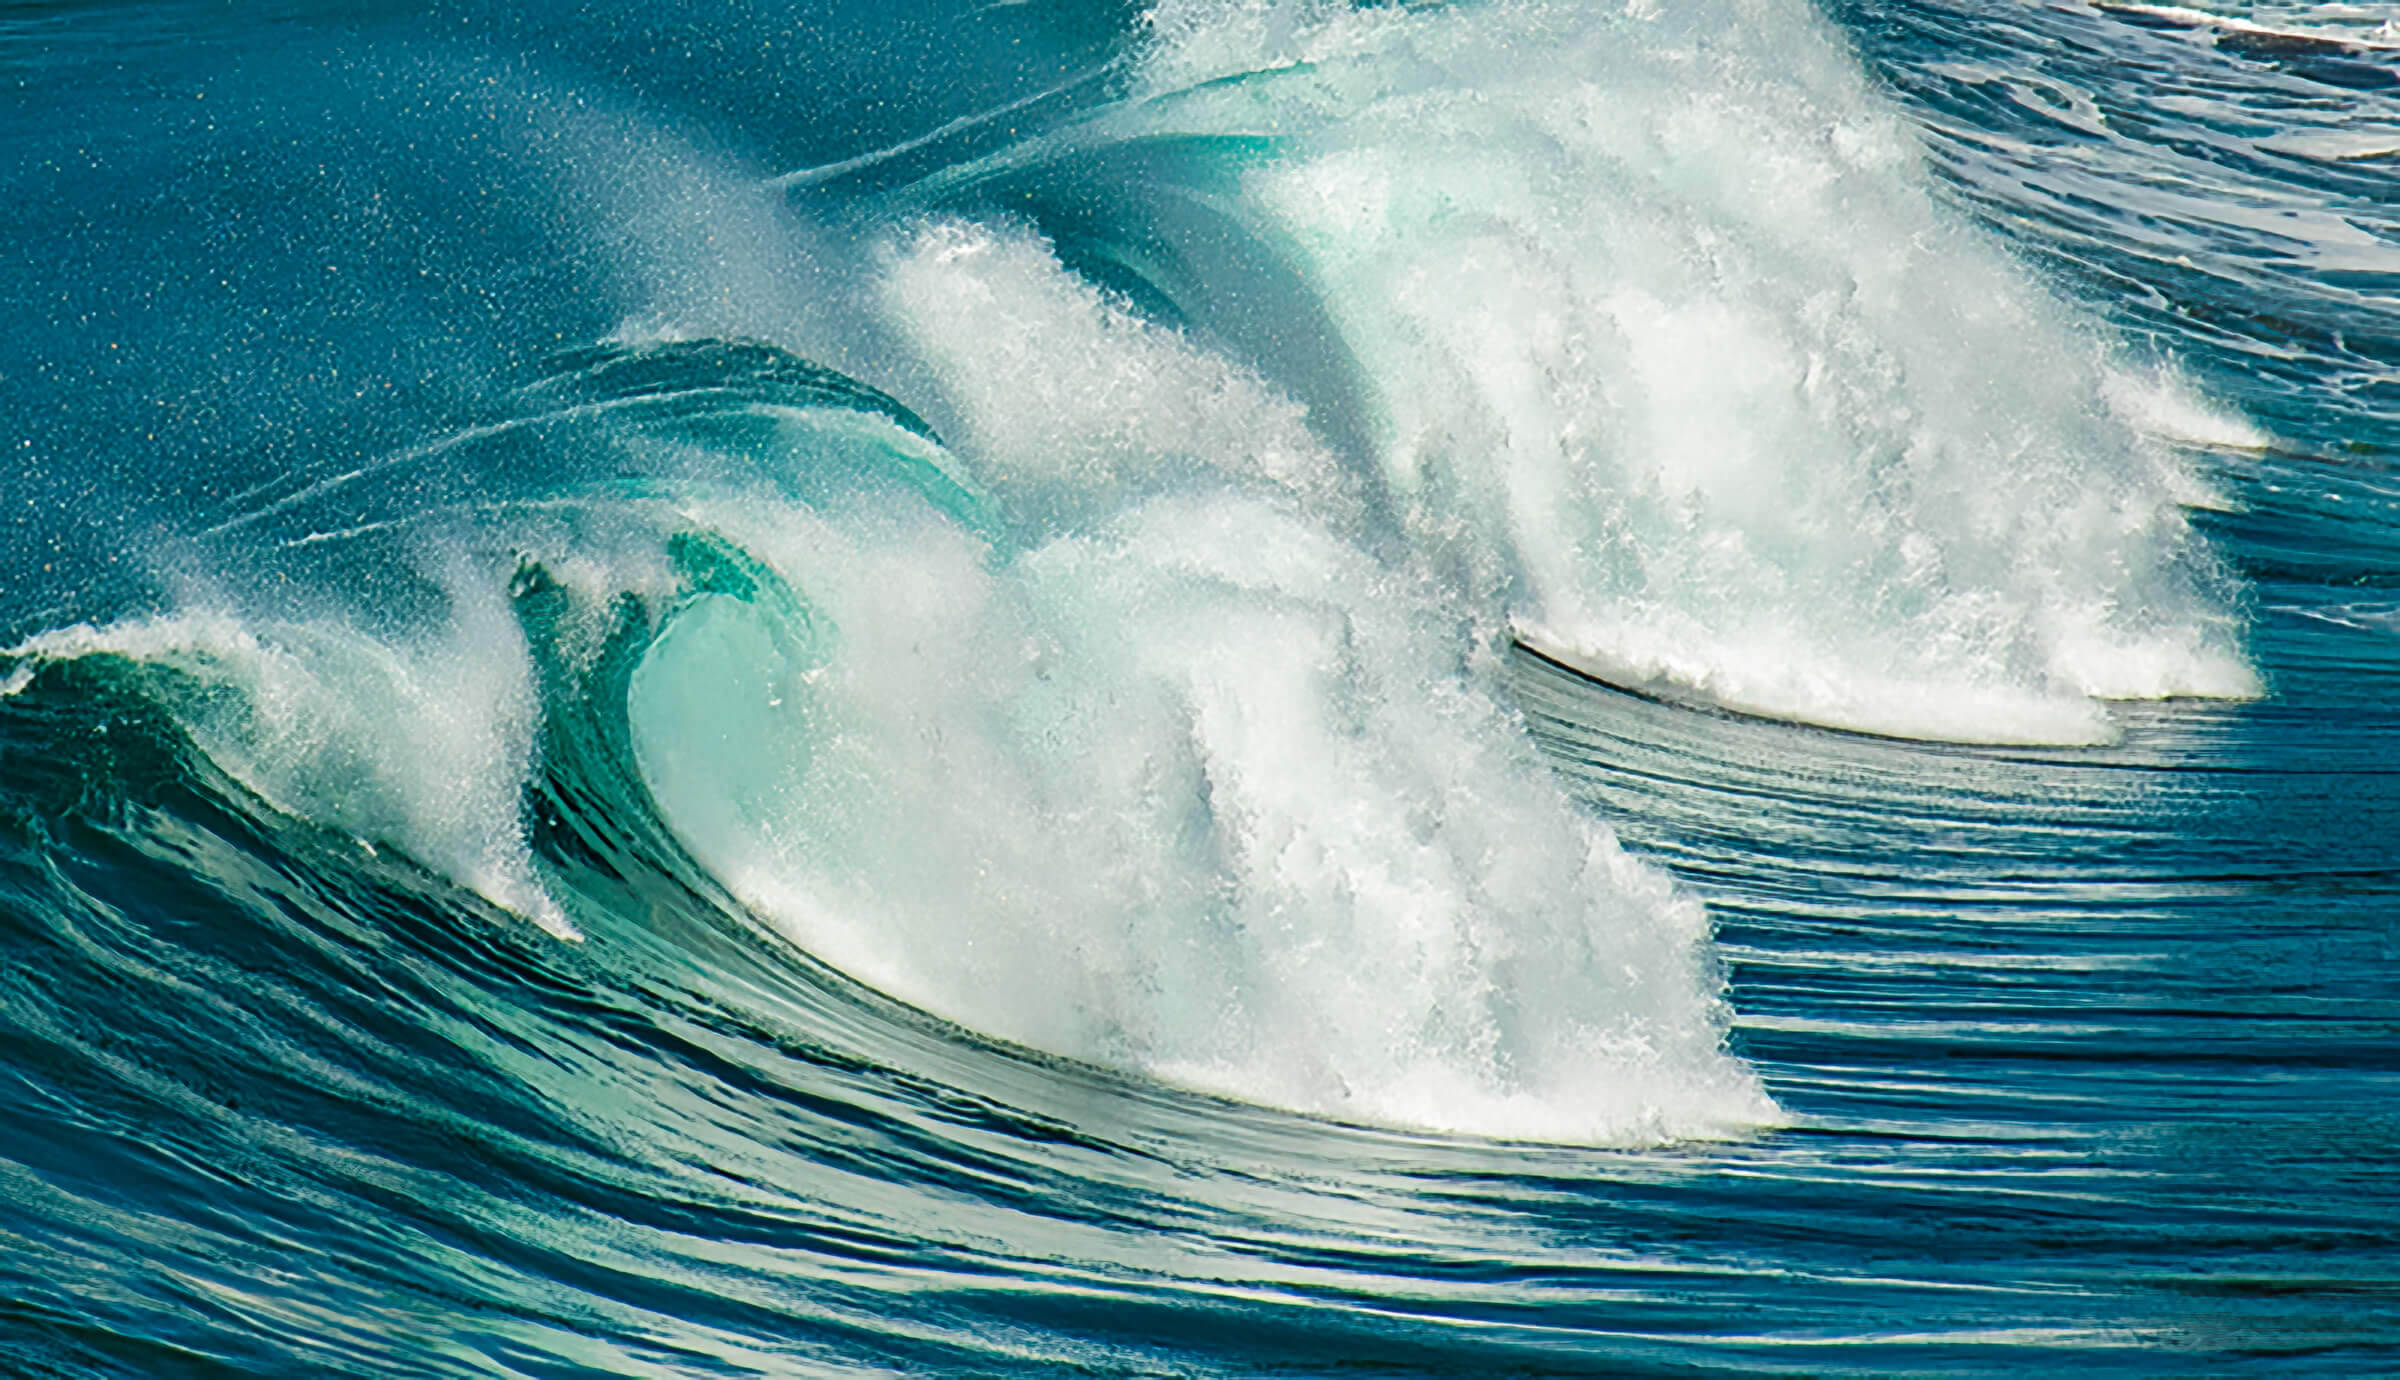 Lightfoot - white foamy wave on sparkling blue ocean